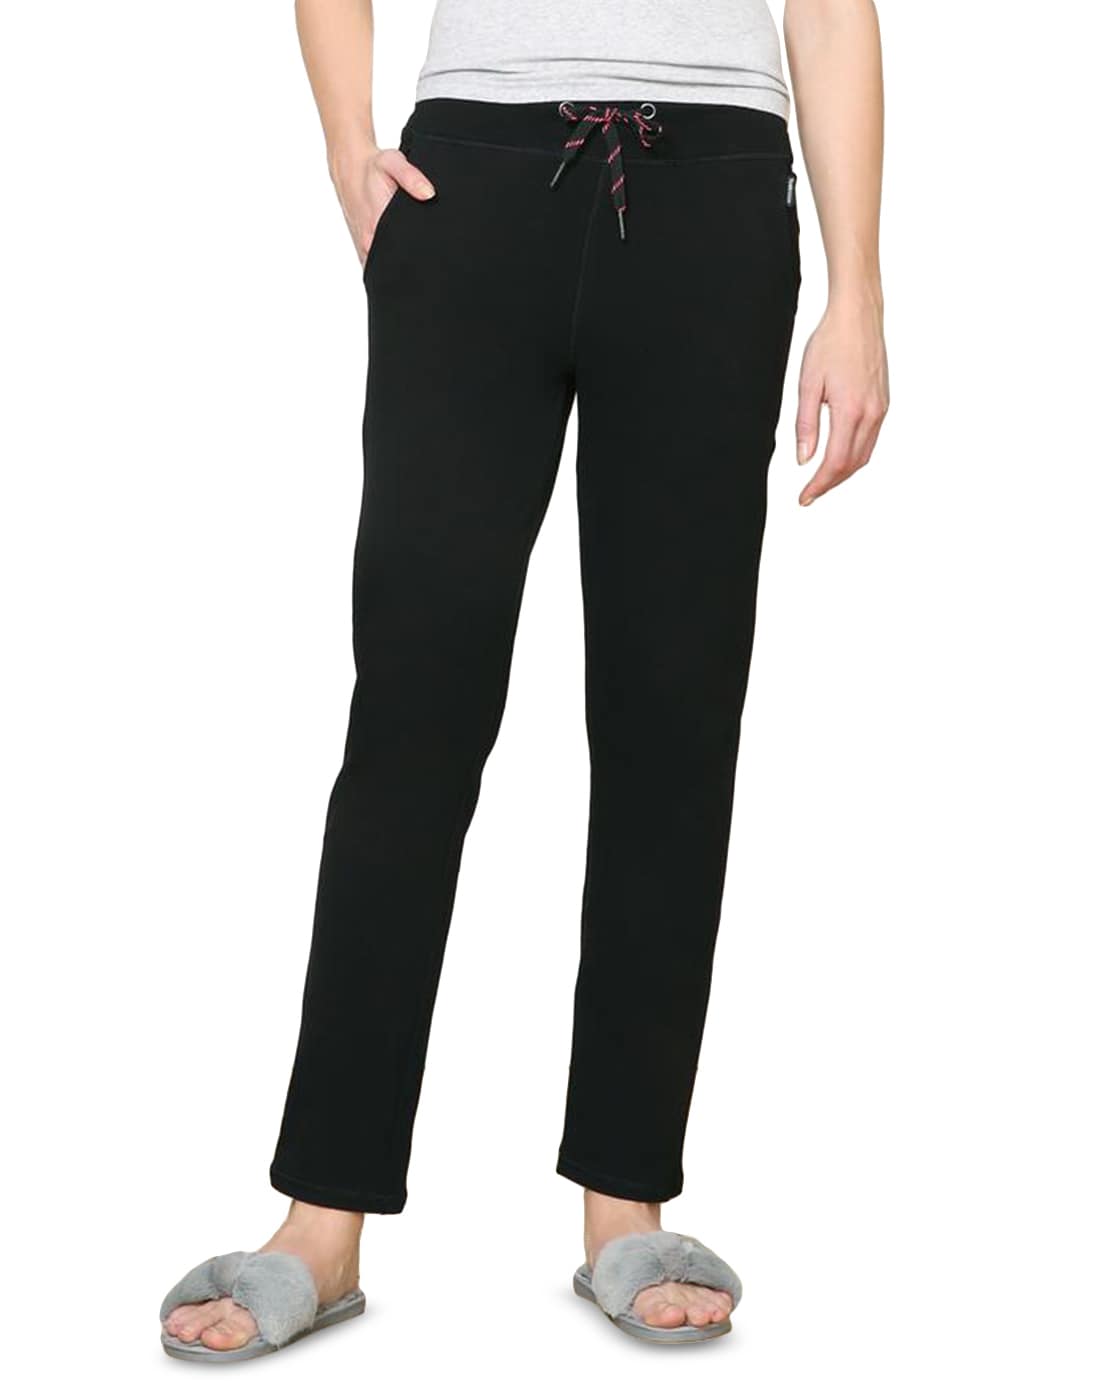 Buy Black Track Pants for Women by VAN HEUSEN Online